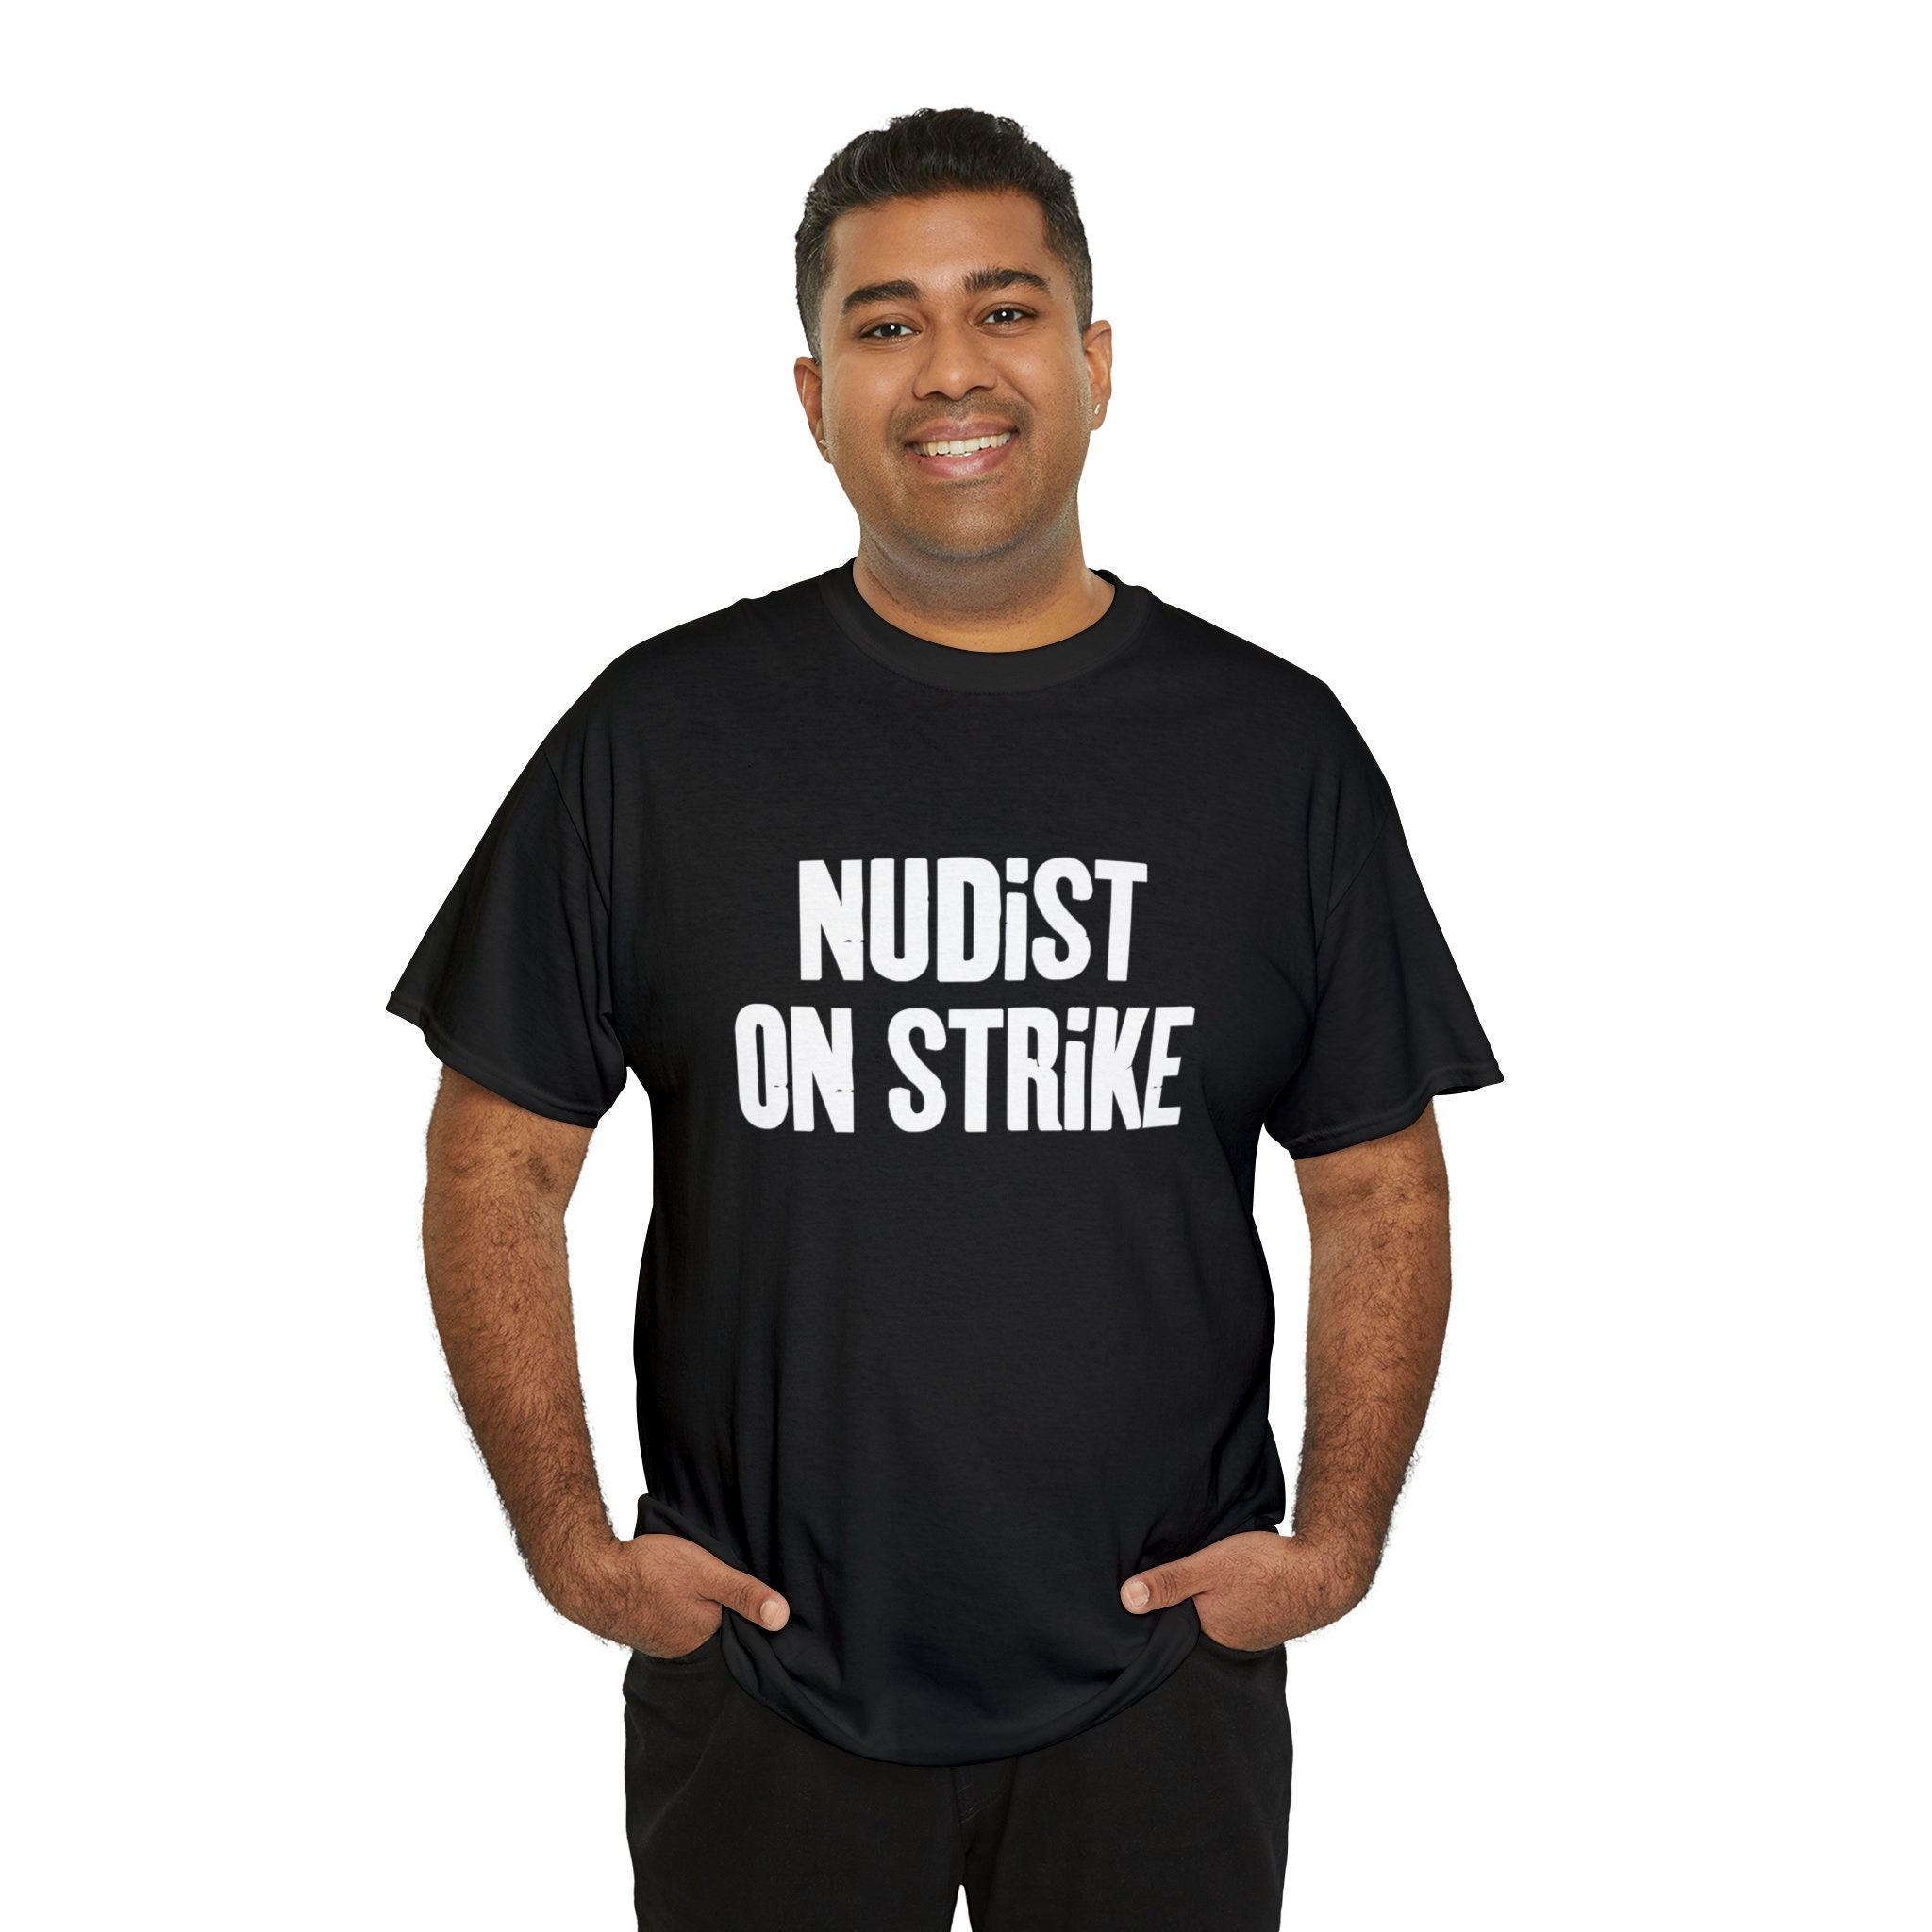 Best of Nudist on strike